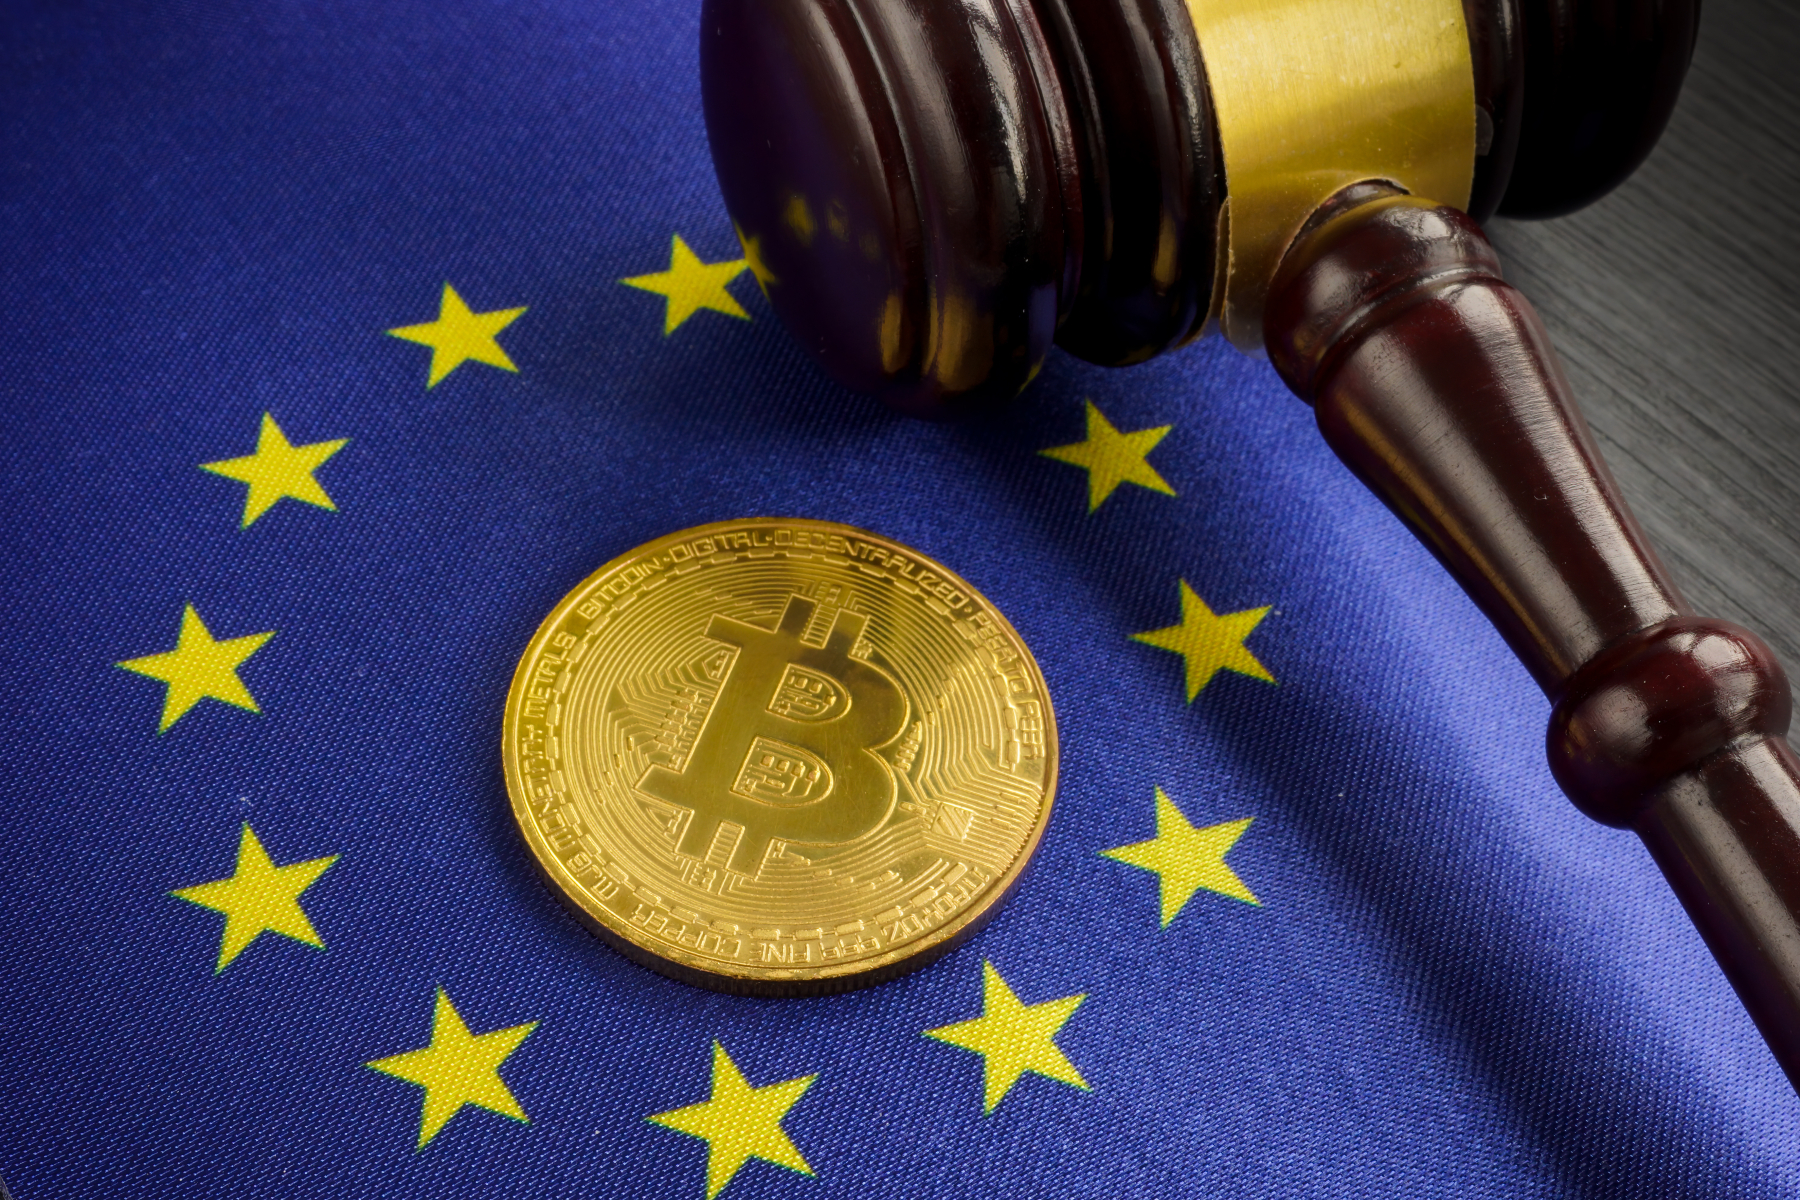 Crucial crypto legislation in the EU is postponed again
